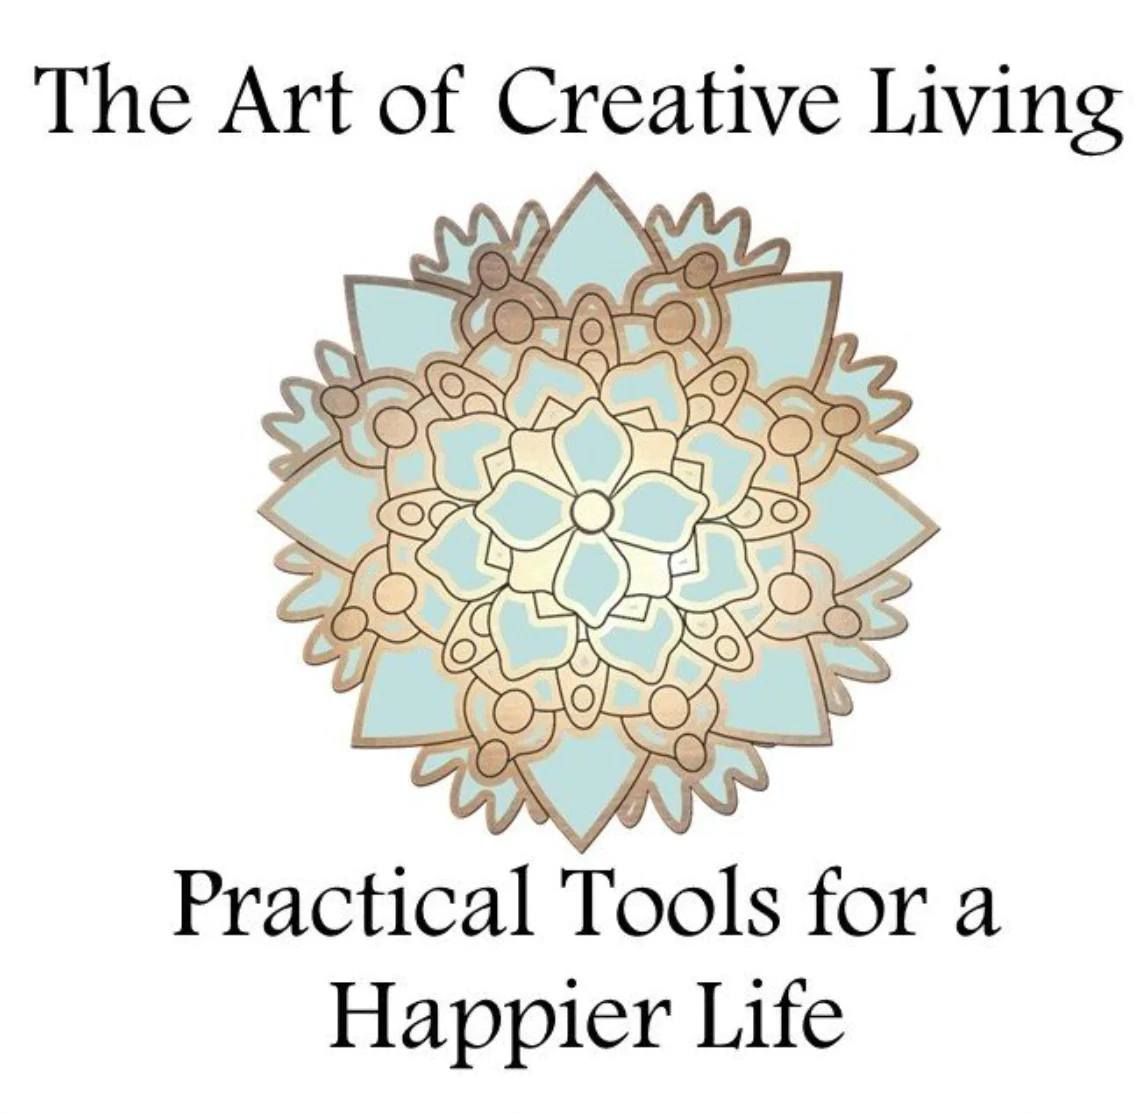 The Art of Creative Living - 8 week series